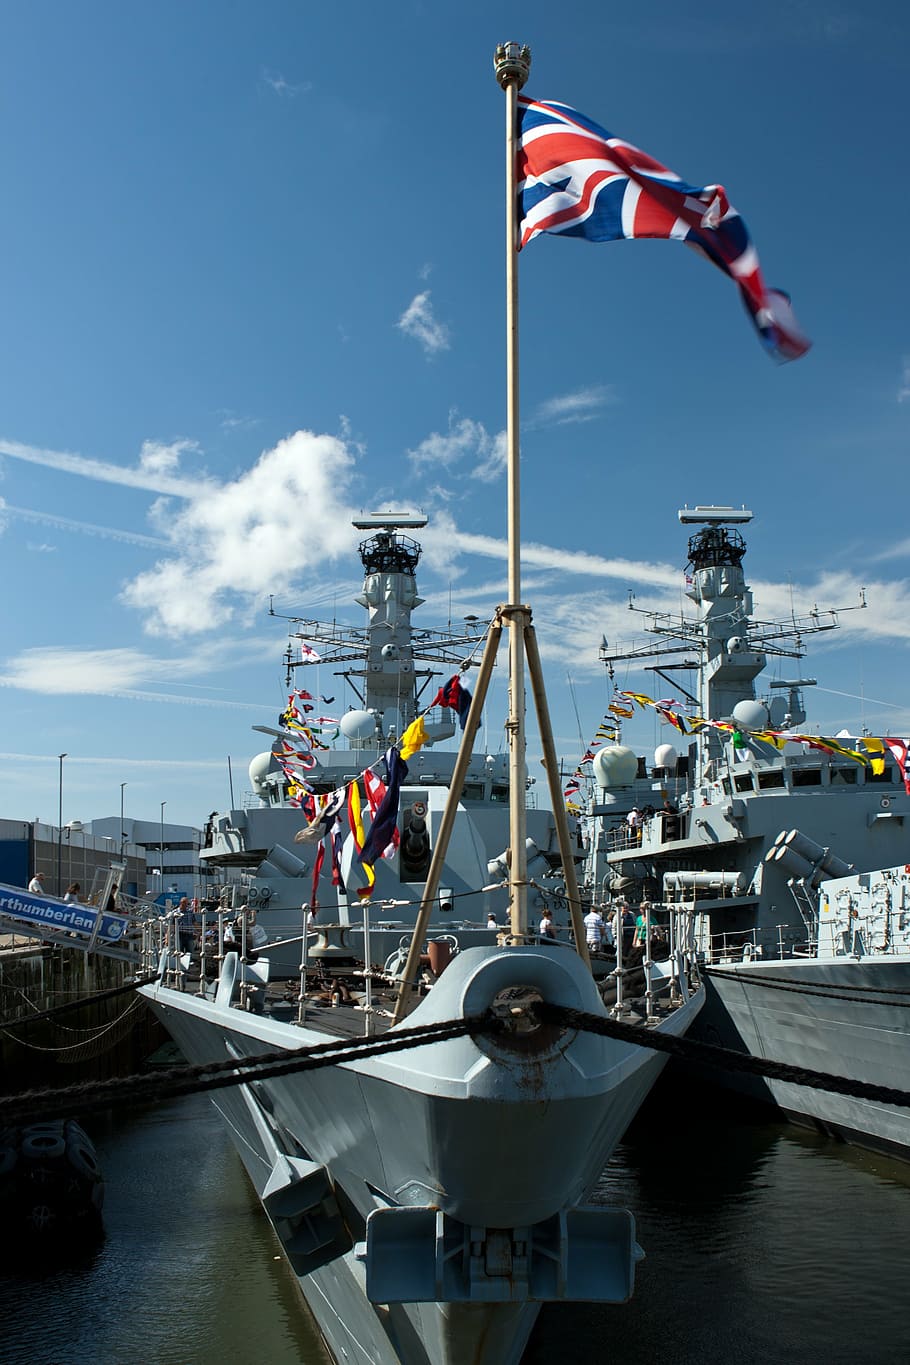 hms northumberland, royal navy frigate, 900 tonnes, hms chatham alongside, royal navy open day, devonport, plymouth, flag, patriotism, sky